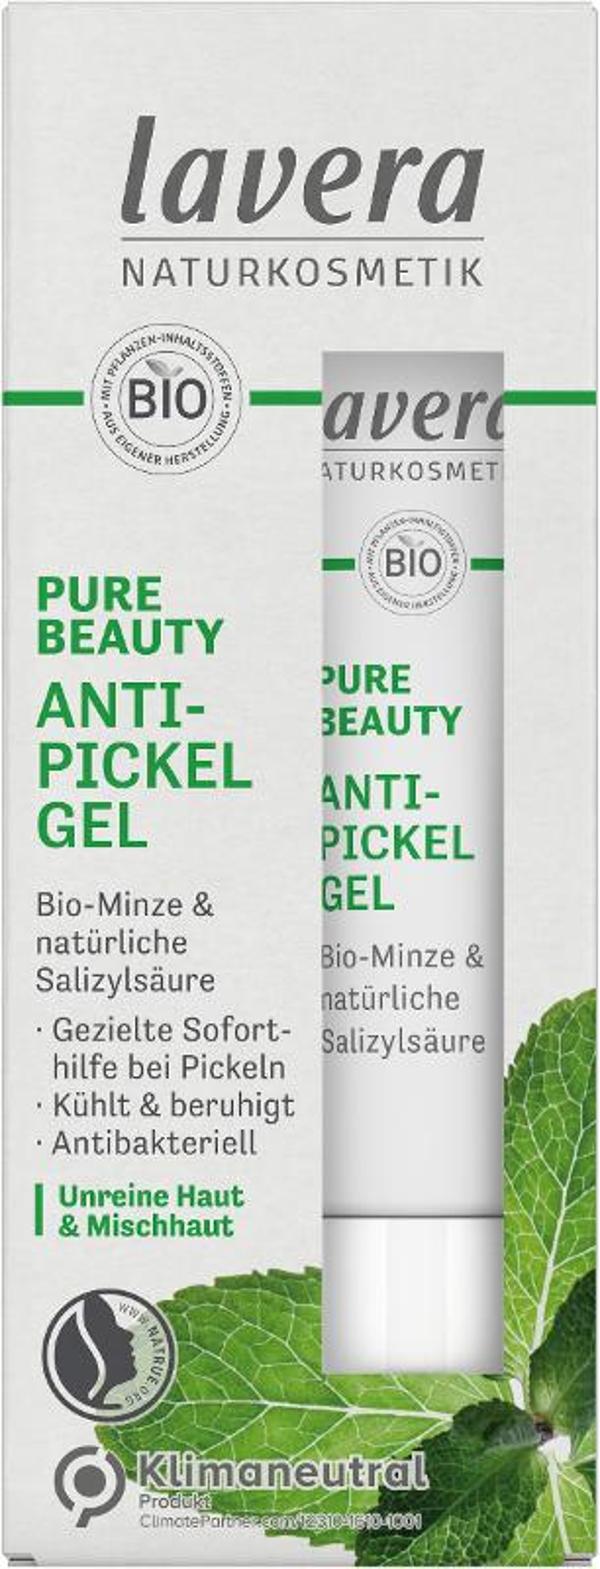 Produktfoto zu Lavera Anti-Pickel Gel Pure Beauty 15ml